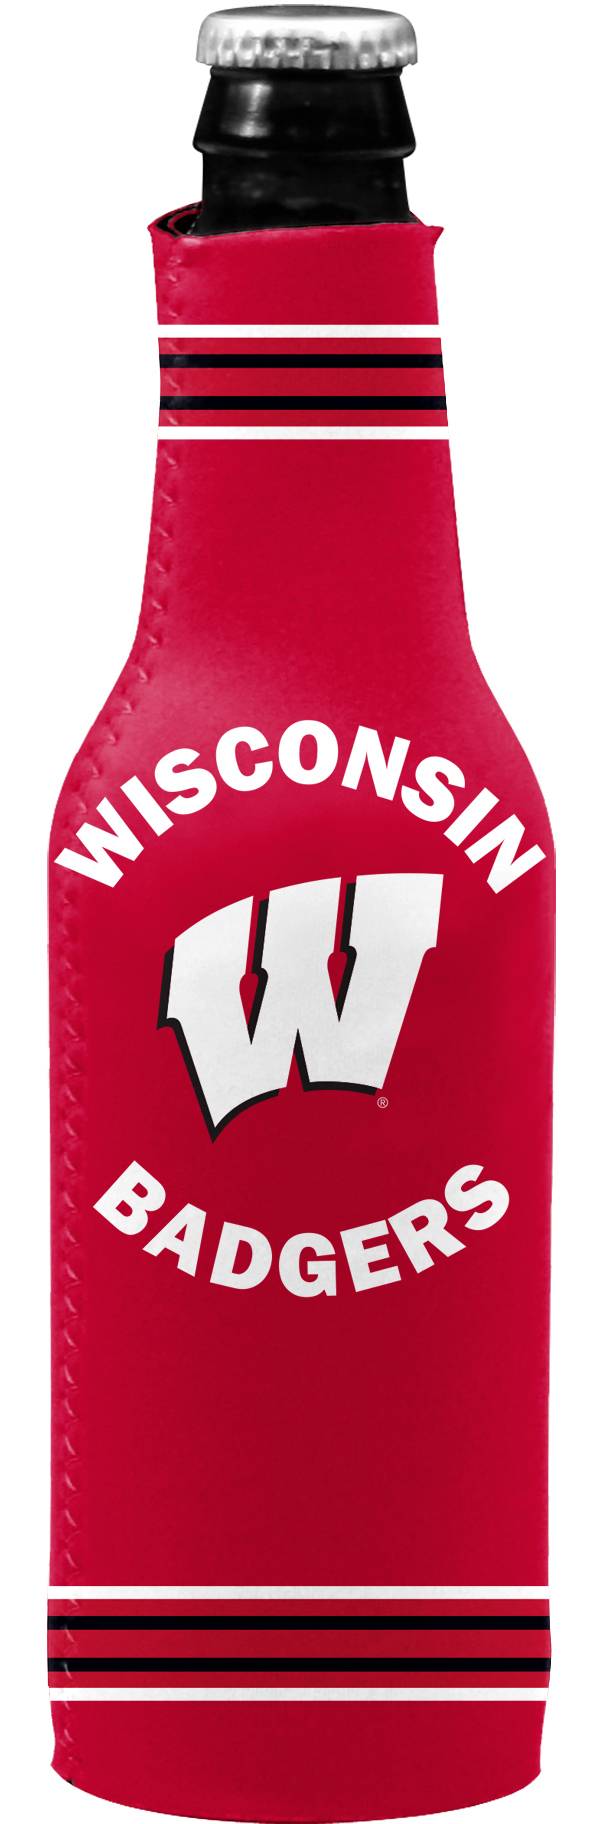 Wisconsin Badgers Bottle Koozie product image